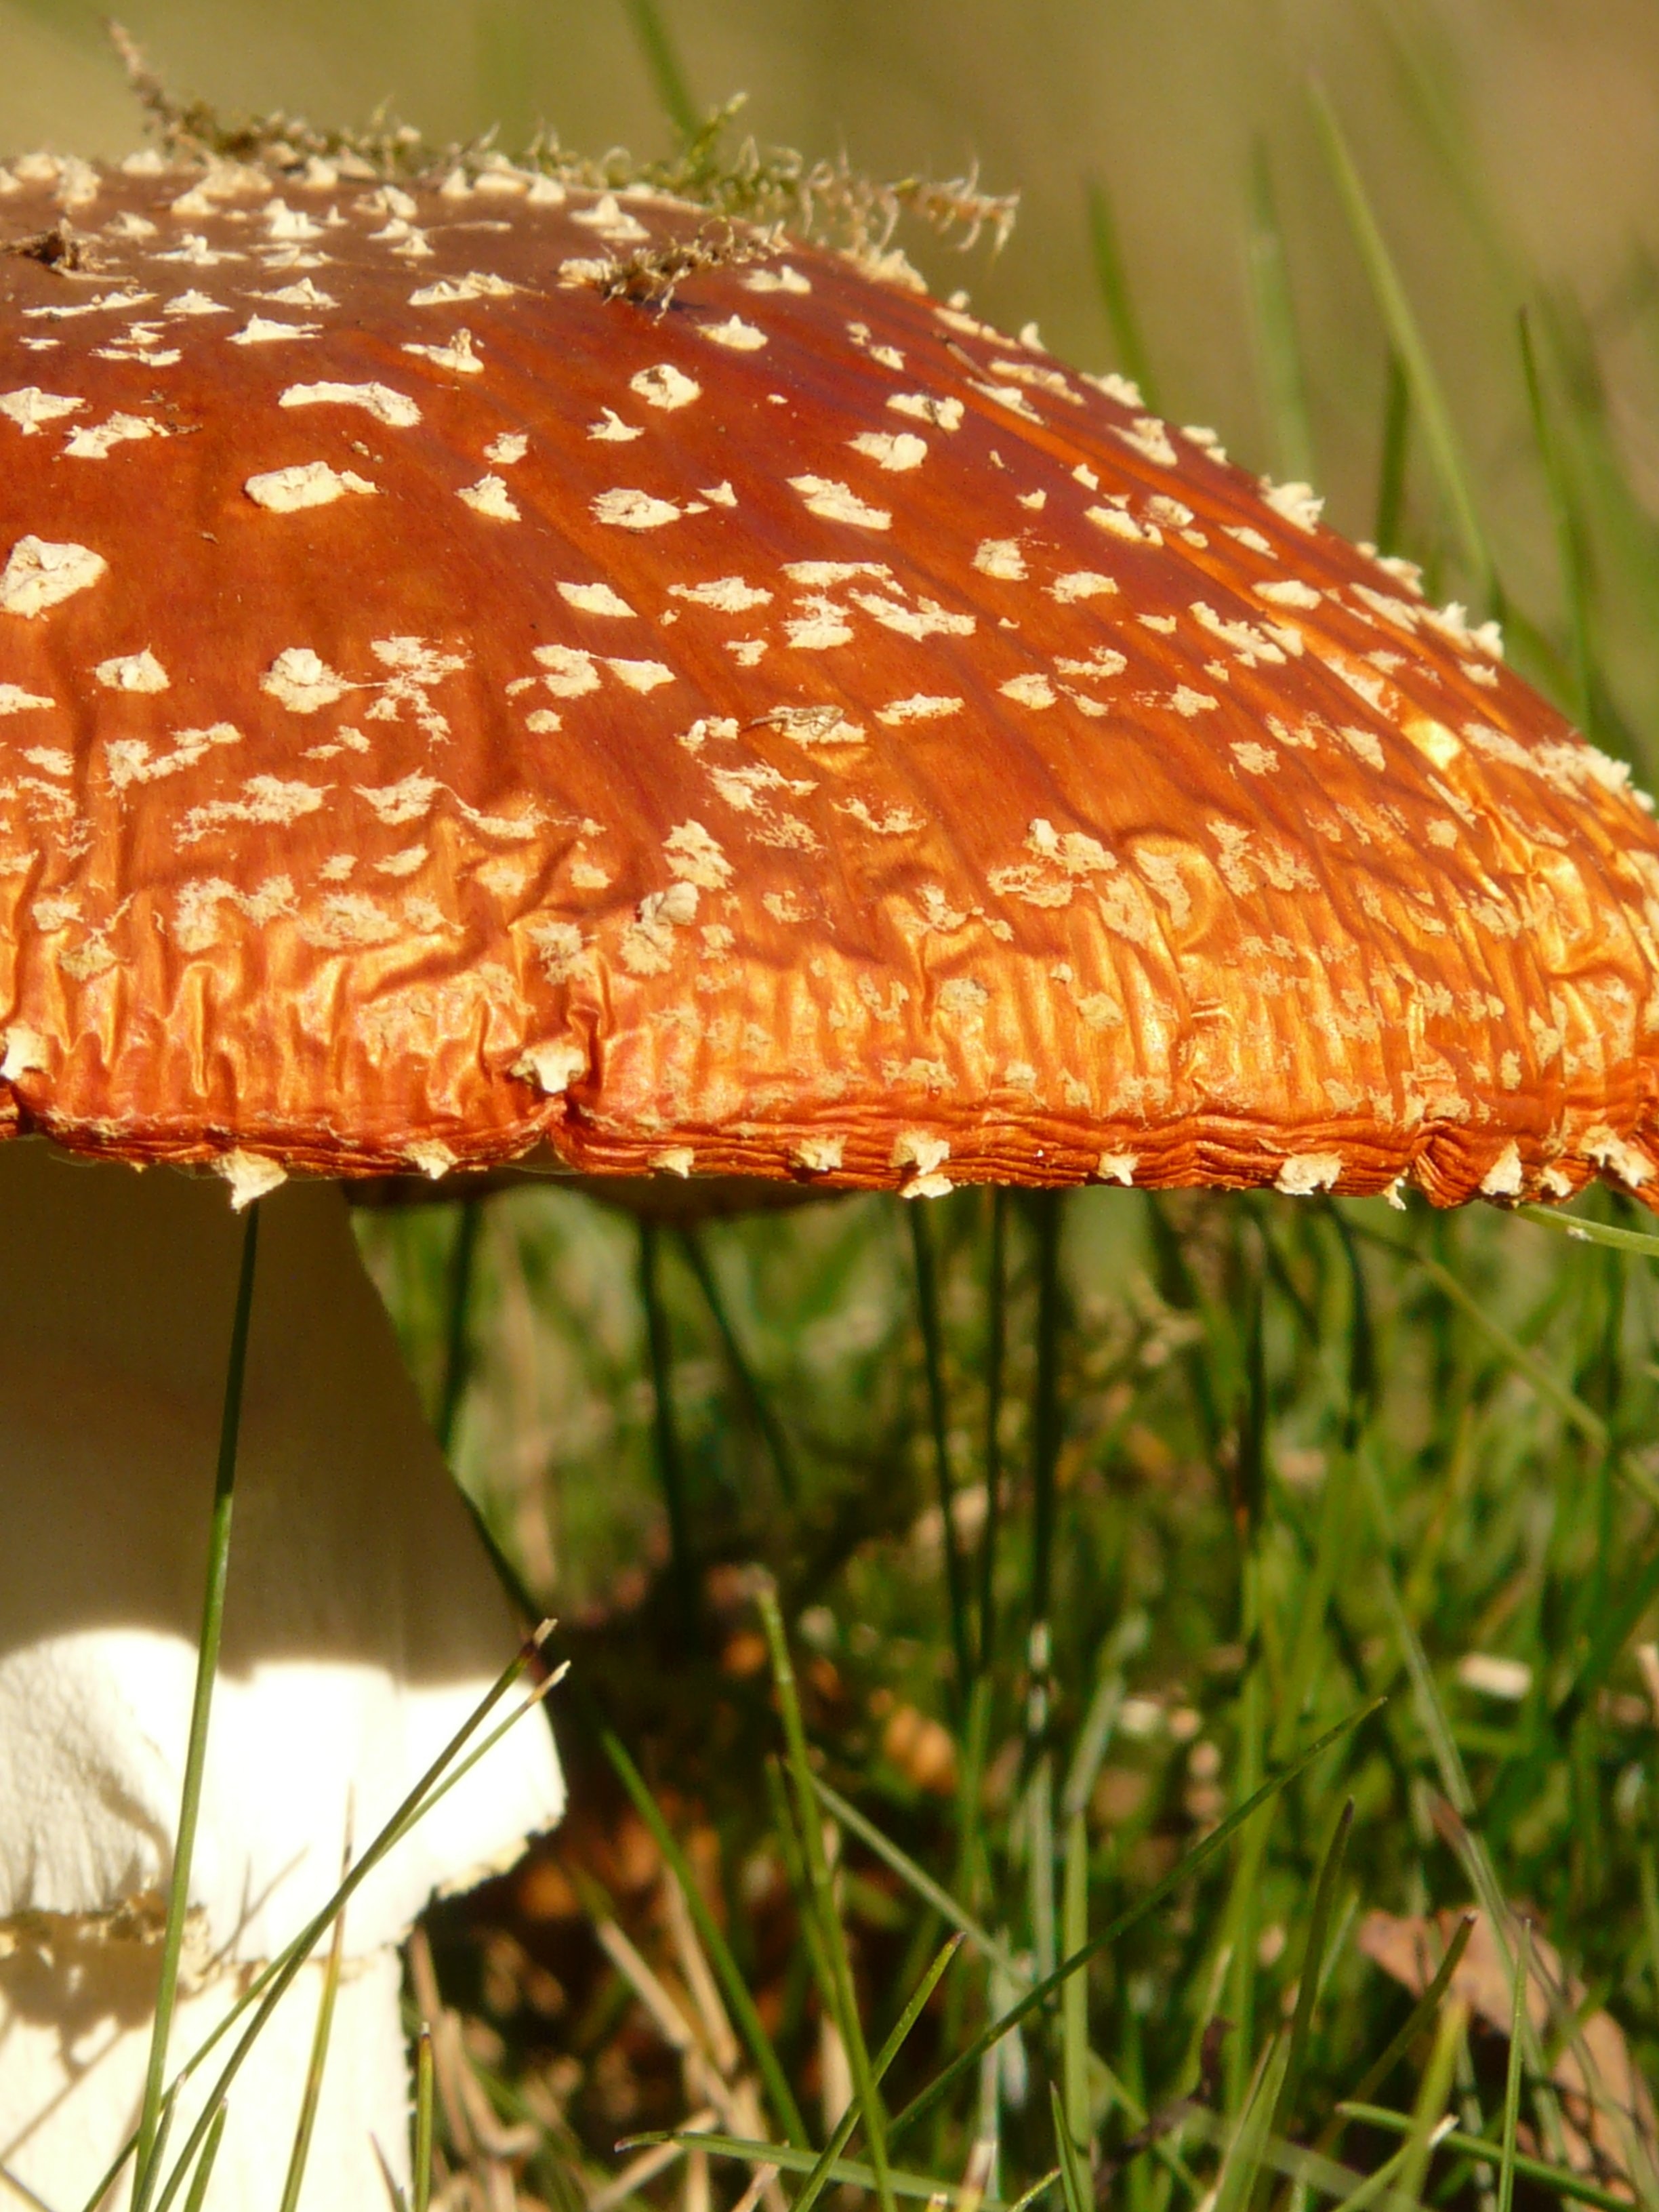 brown and gray mushroom